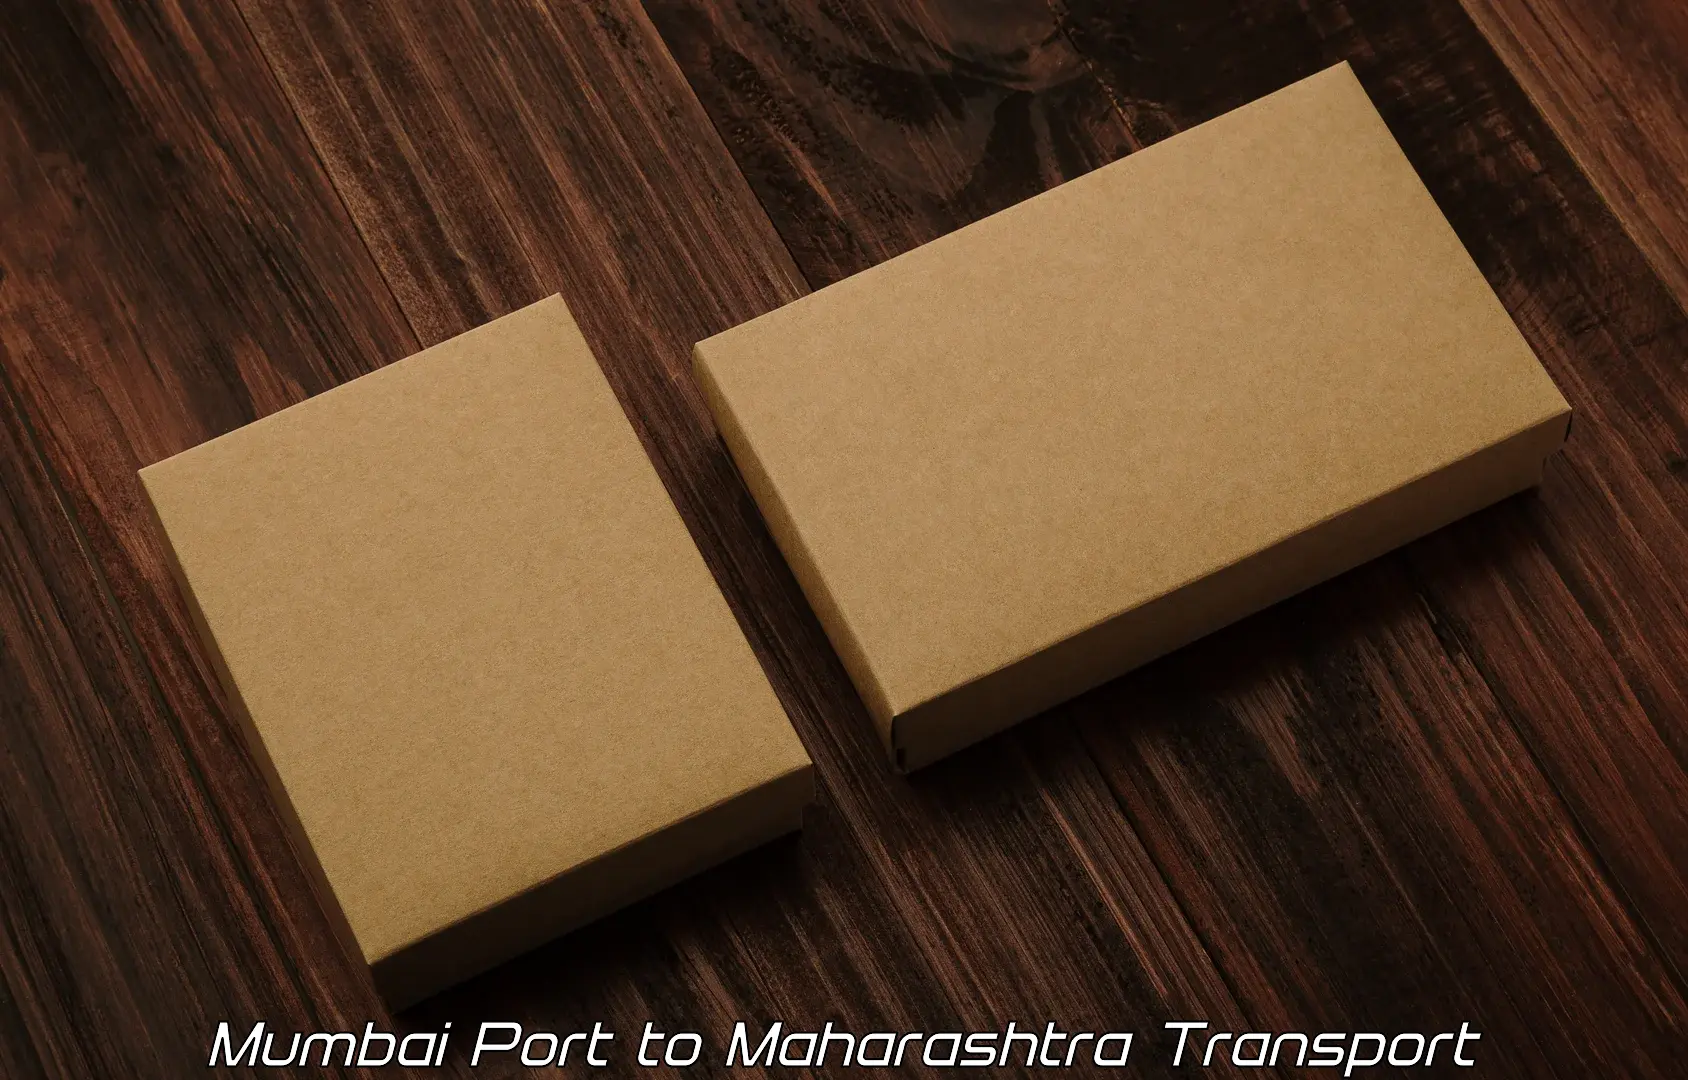 Pick up transport service Mumbai Port to Virar